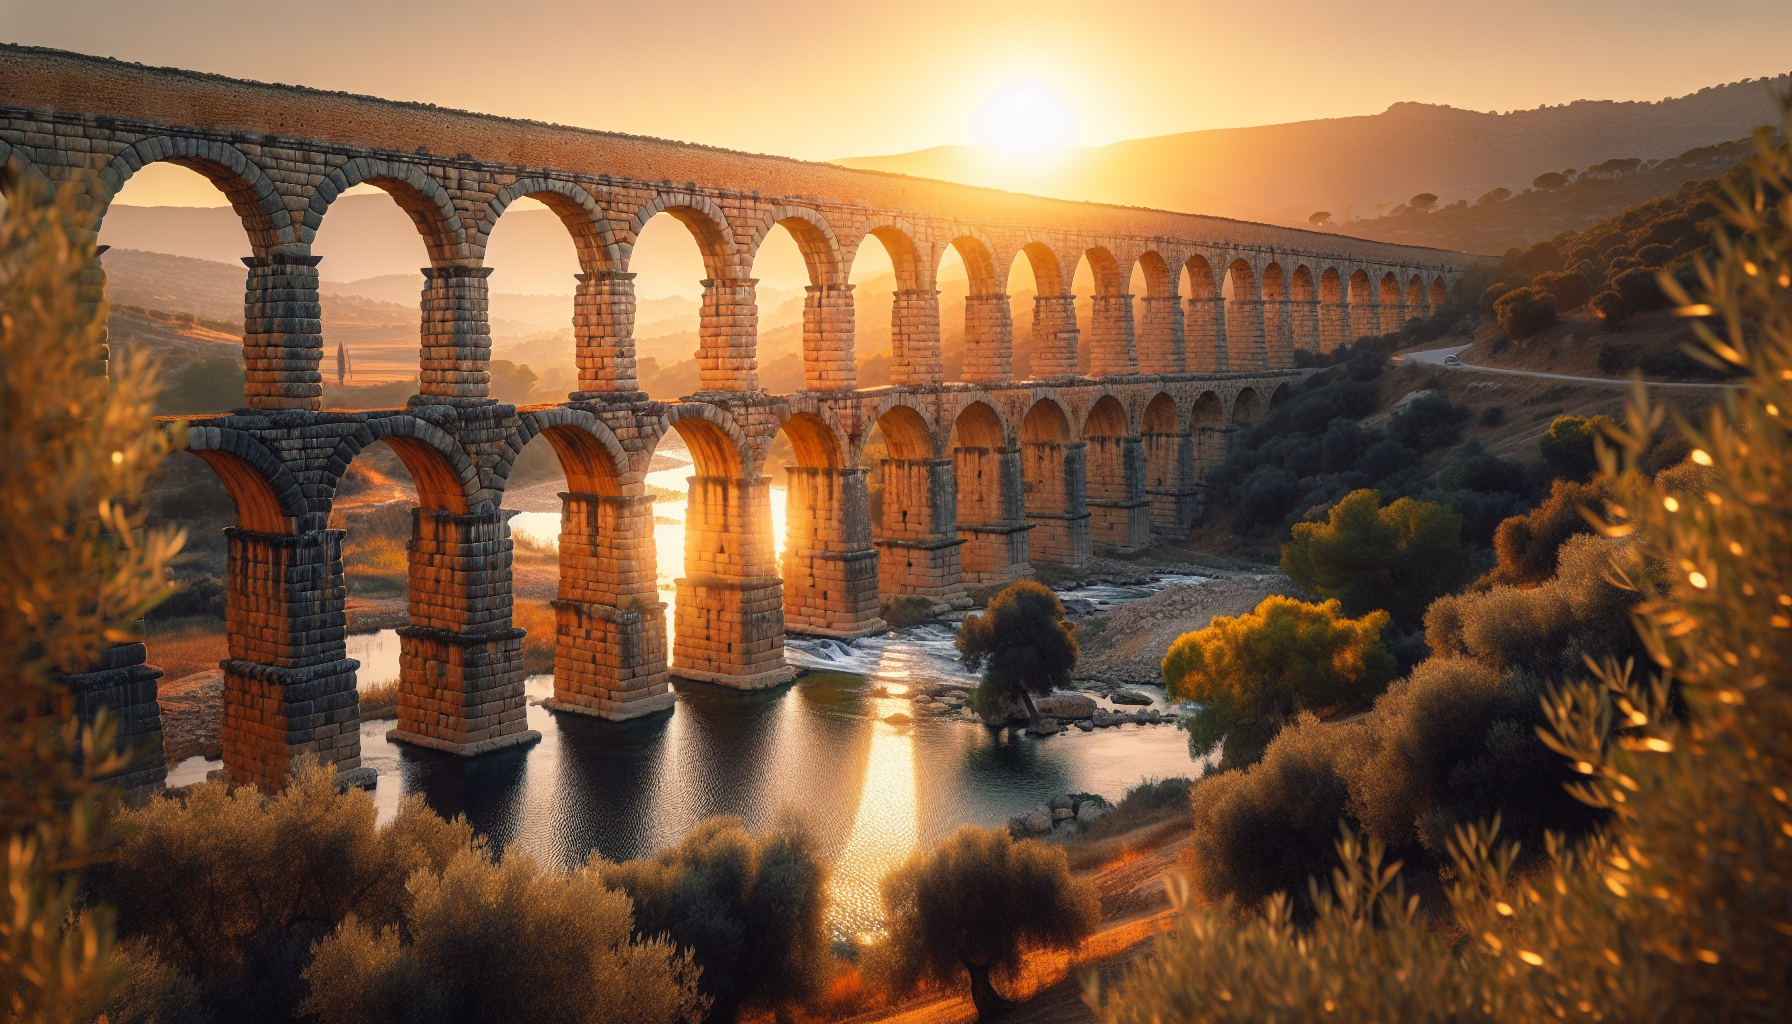 Illustration of a Roman aqueduct system